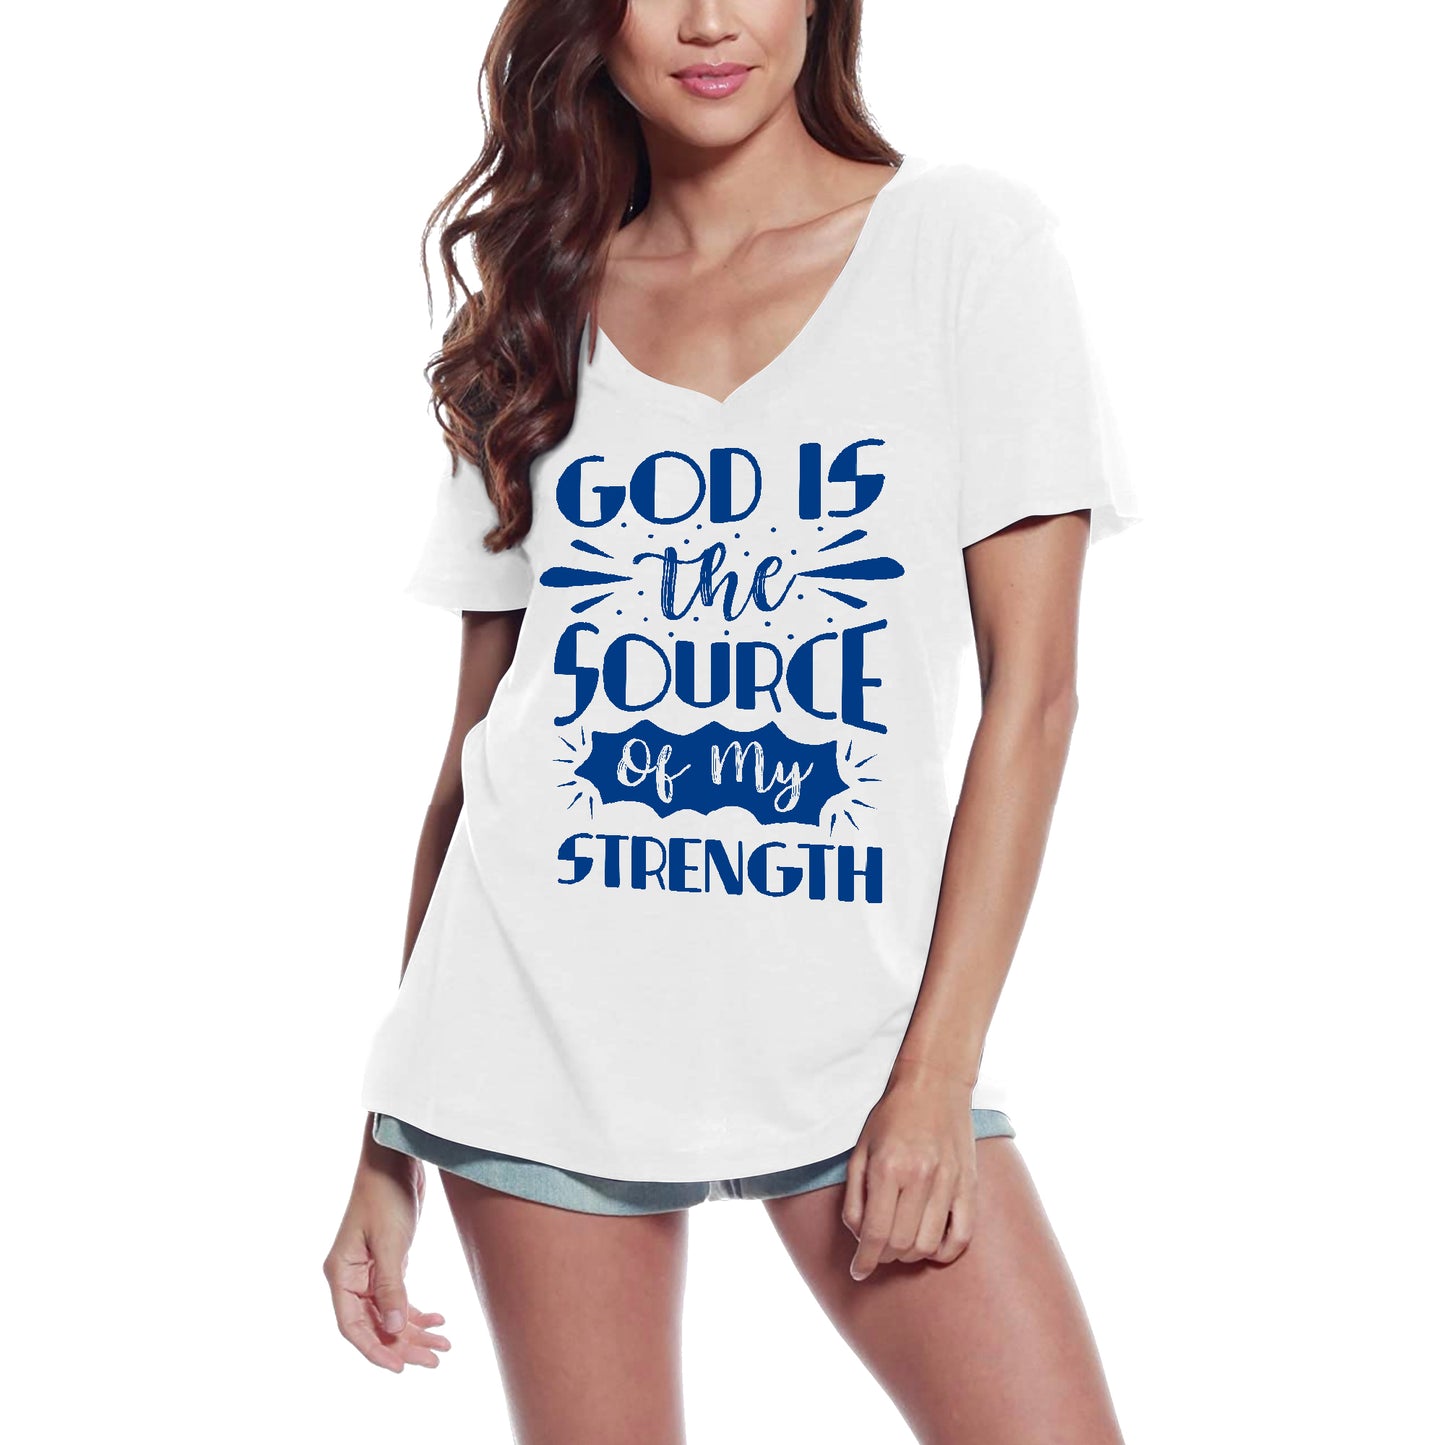 ULTRABASIC Women's T-Shirt God is the Source of My Strenght - Motivational Shirt